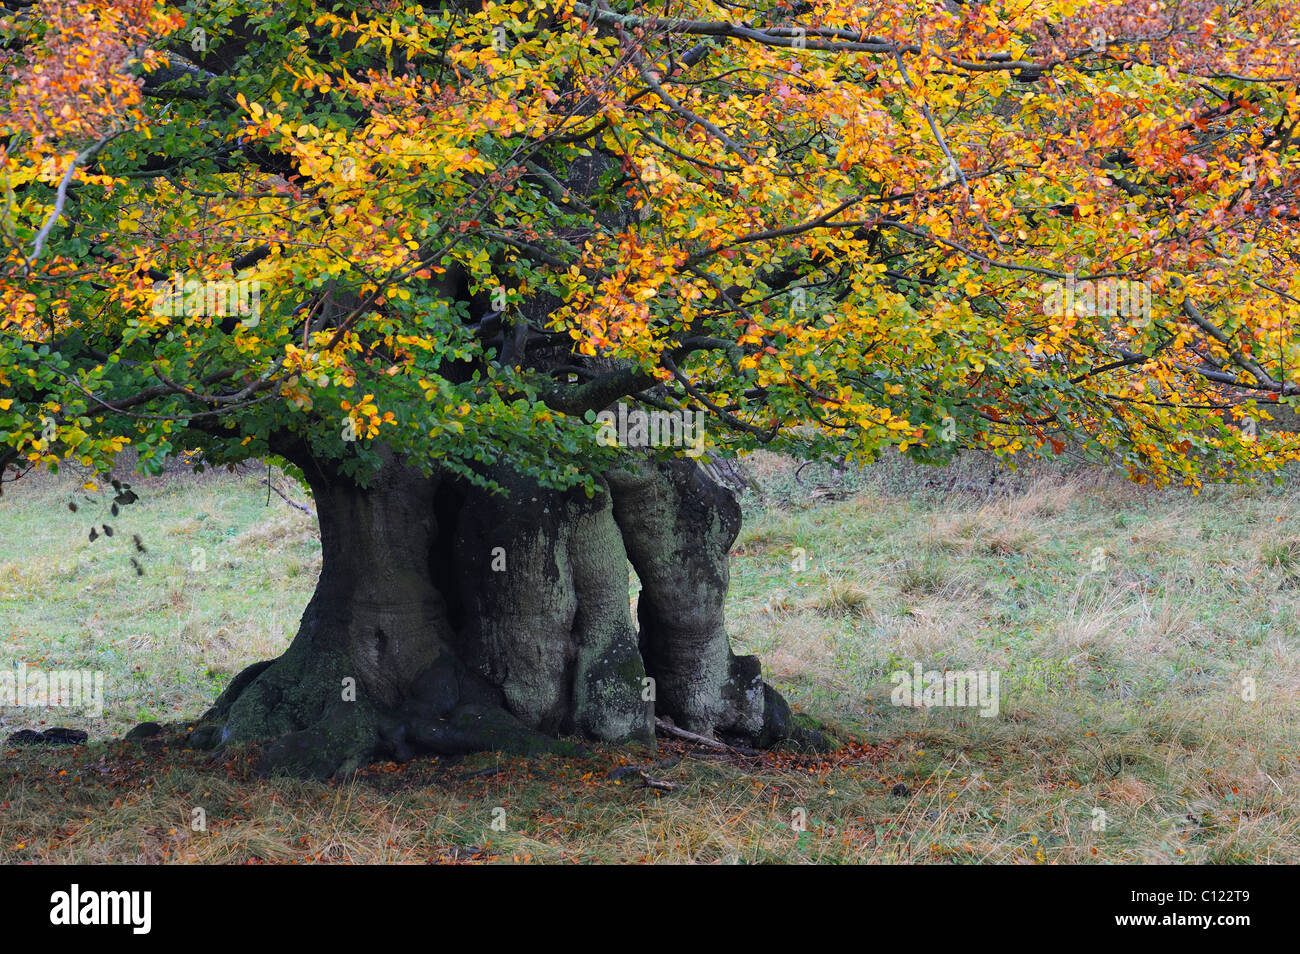 European Beech (Fagus sylvatica), autumn-colored ancient beech tree, Jaegersborg, Denmark, Scandinavia, Europe Stock Photo